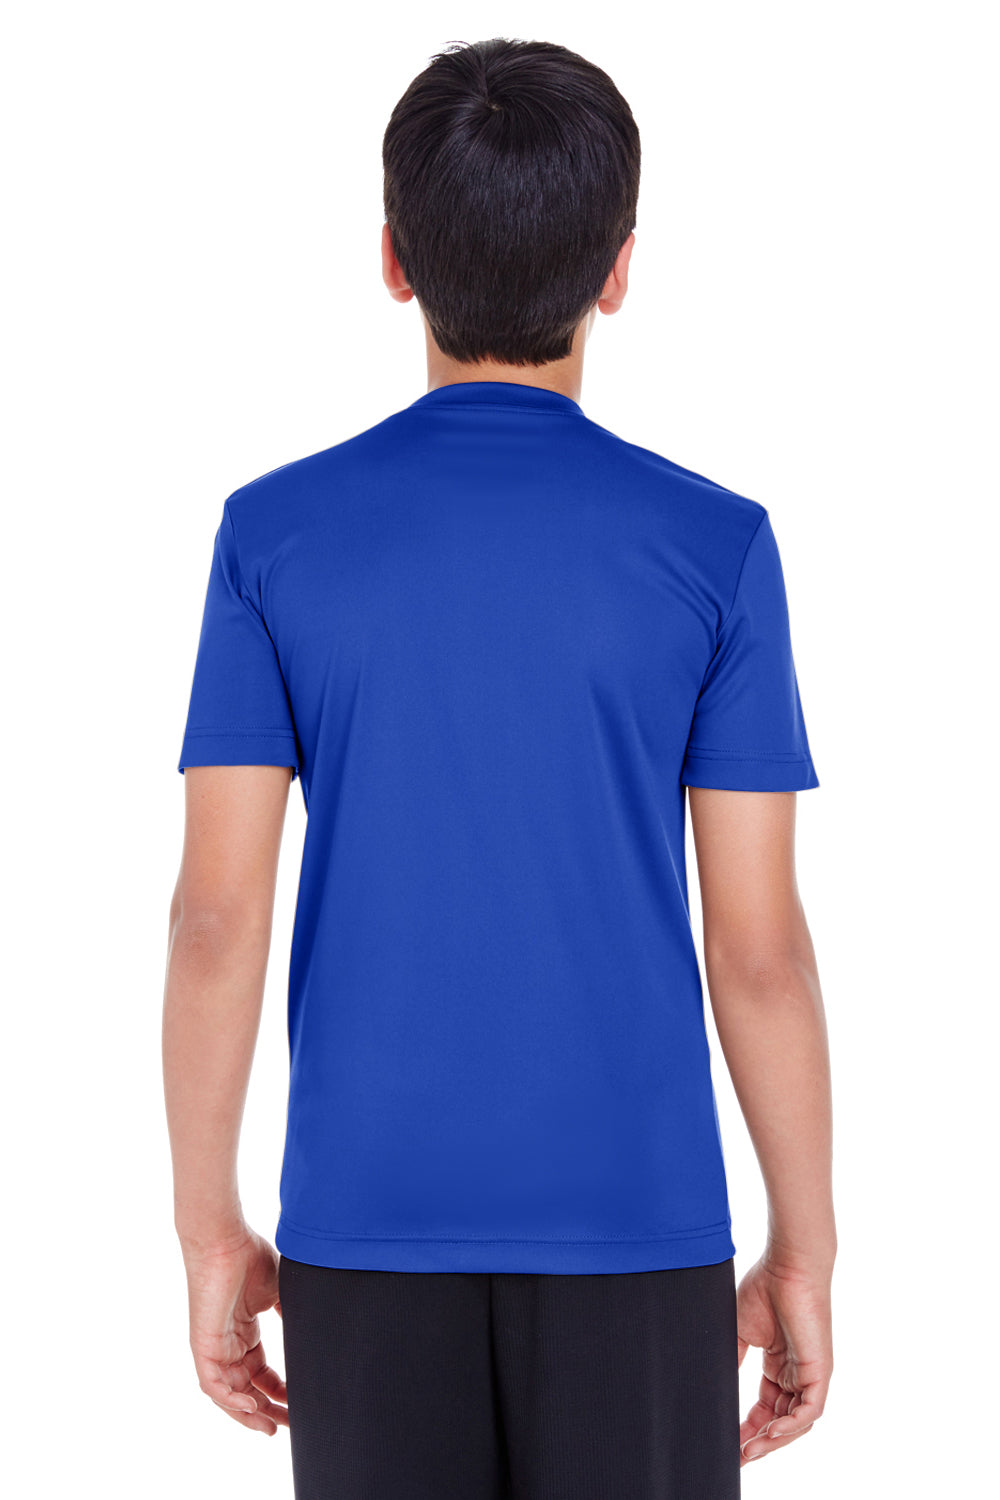 Team 365 TT11Y Youth Zone Performance Moisture Wicking Short Sleeve Crewneck T-Shirt Royal Blue Back